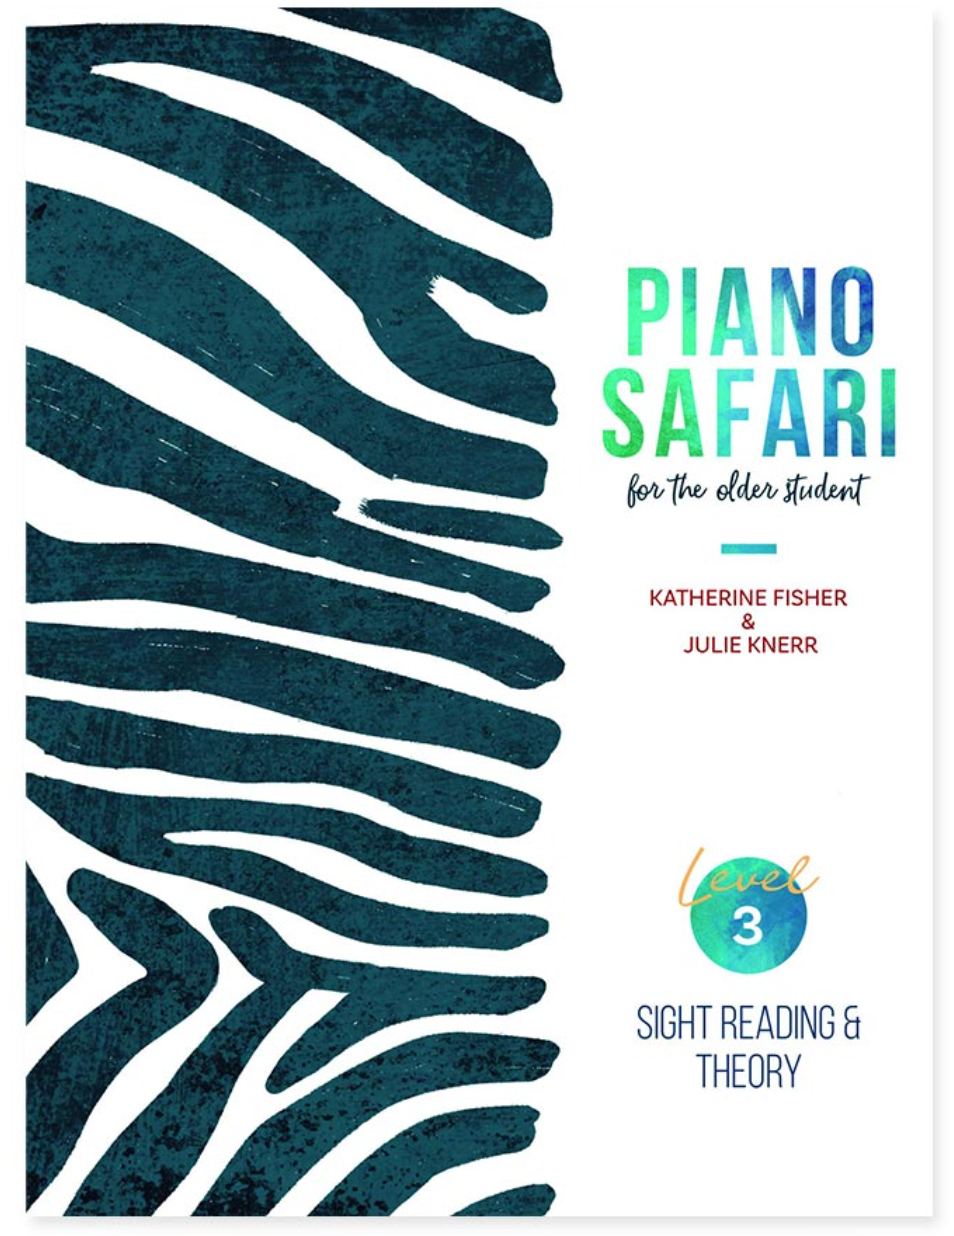 Piano Safari Older Student Sight Reading & Theory 3 - Fisher Katherine; Hague Julie Knerr Piano Safari PNSF1061